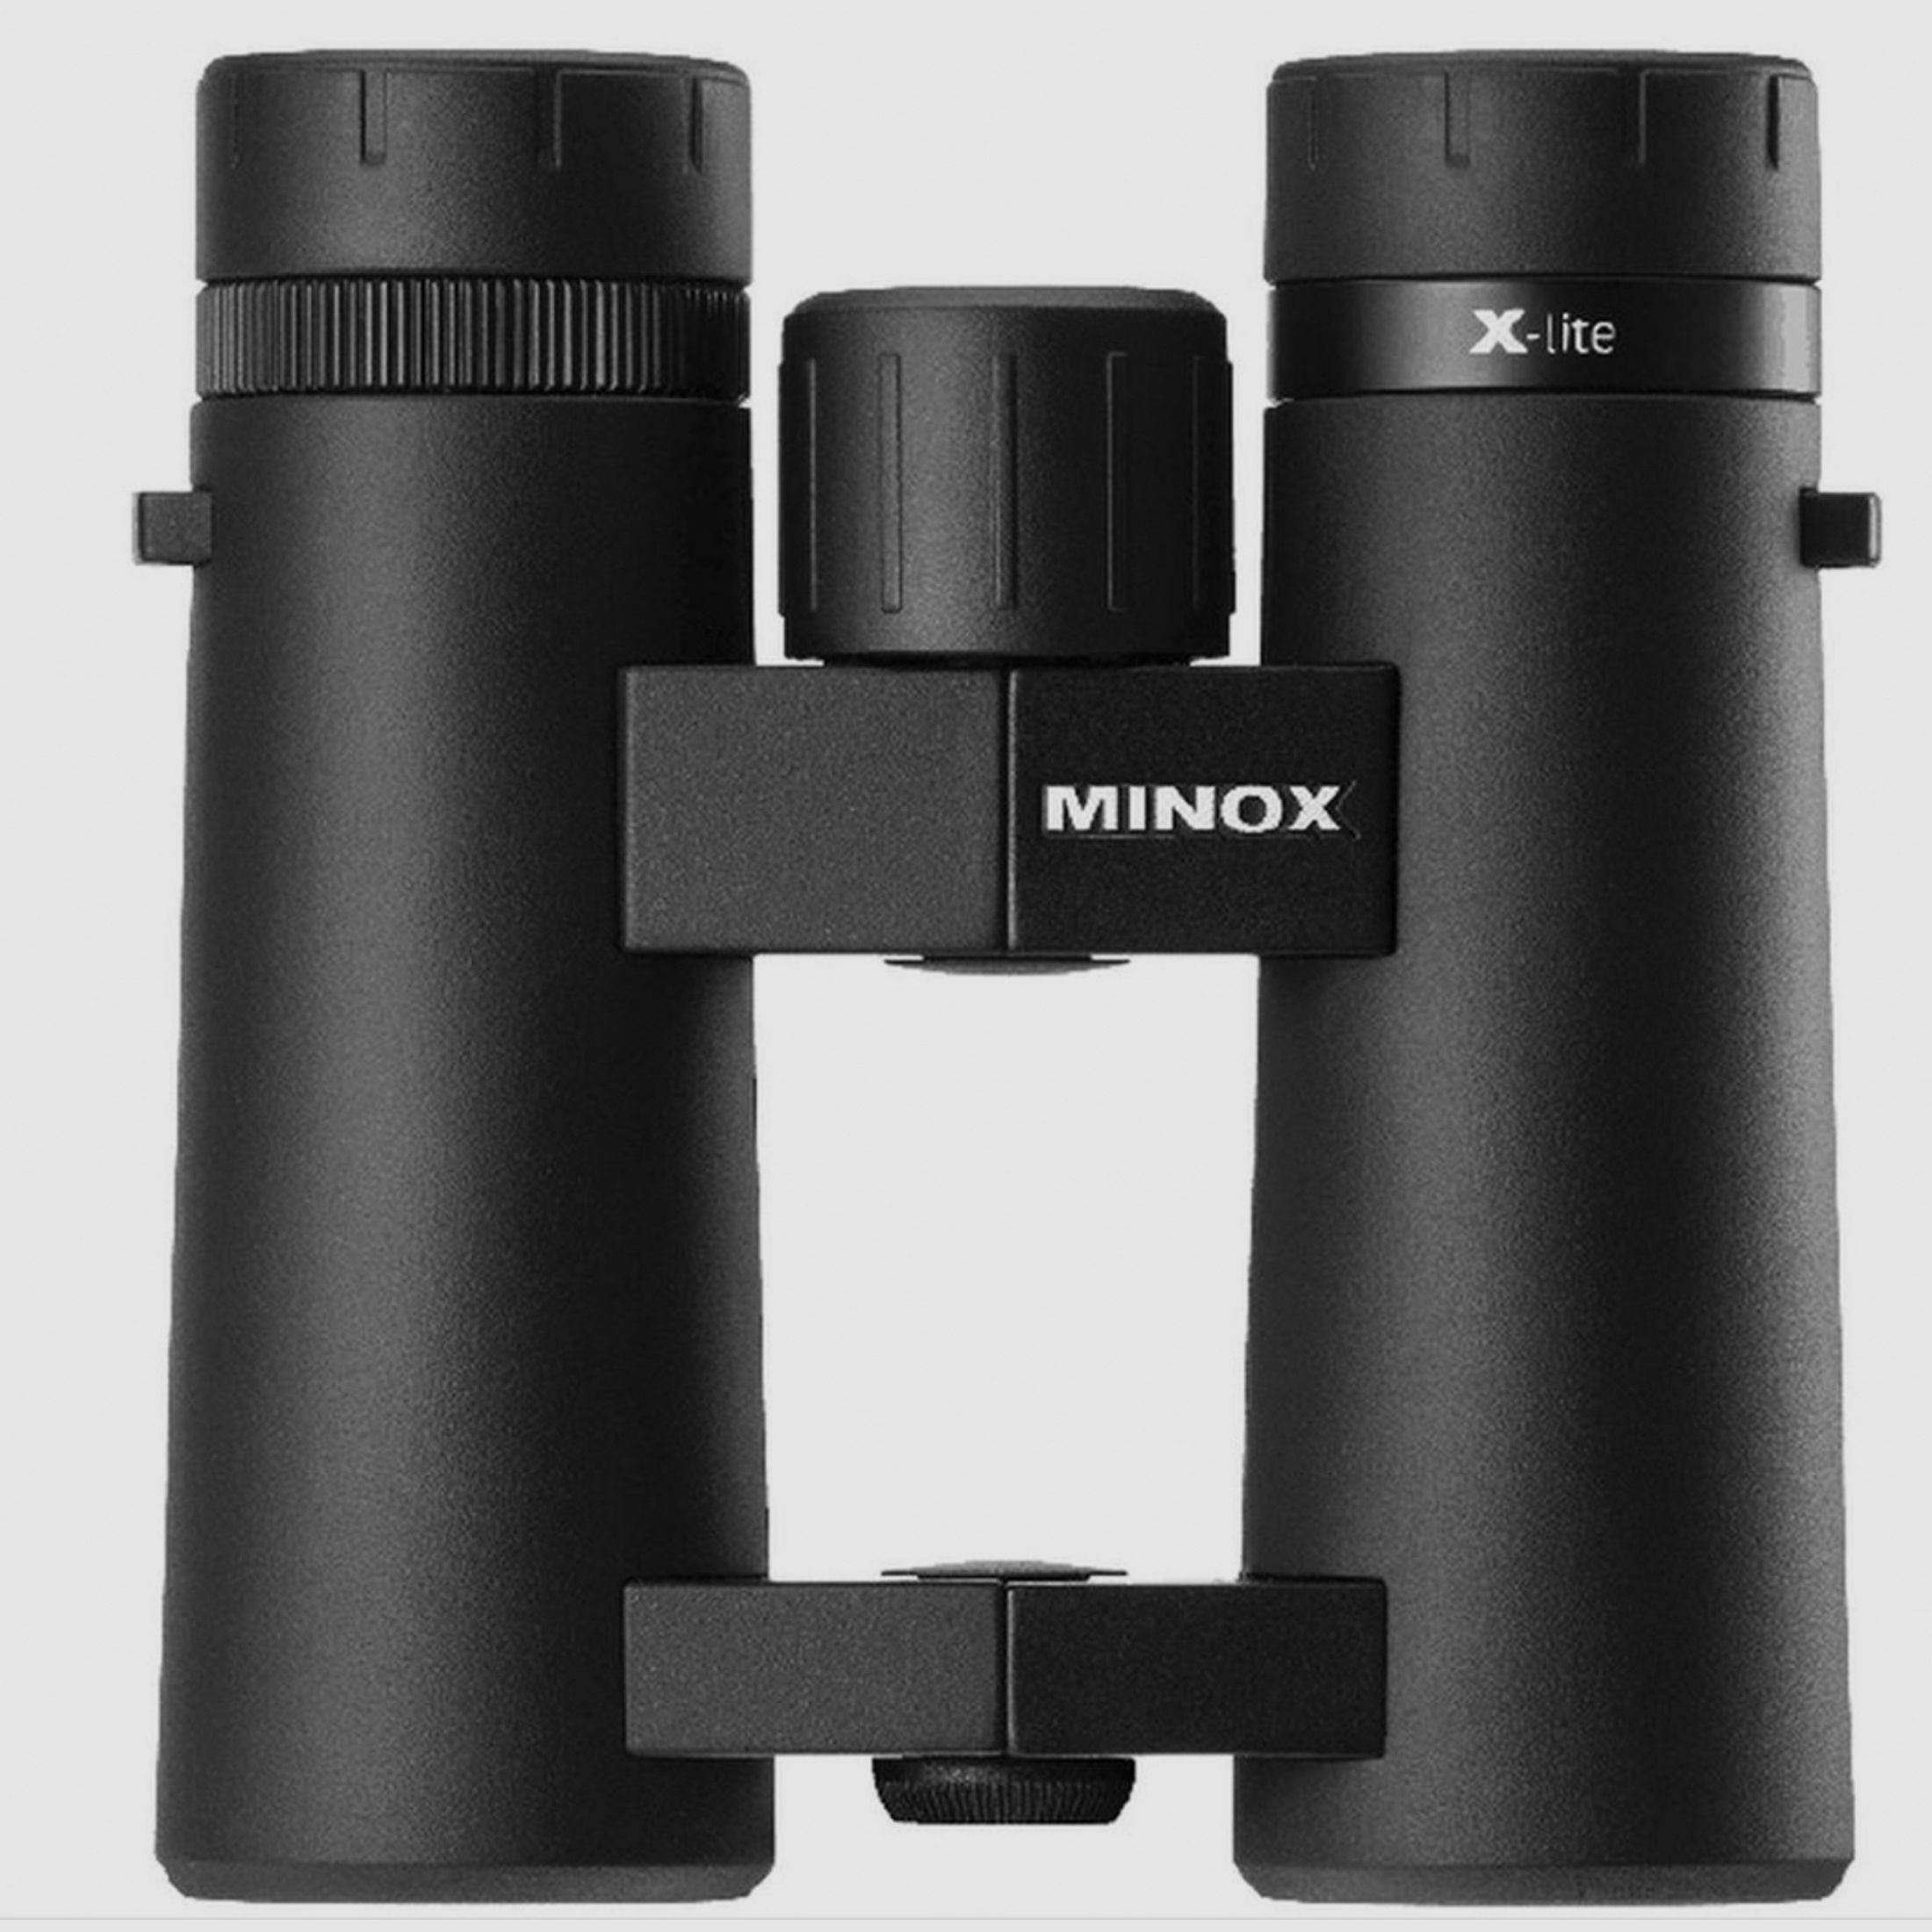 Minox Minox X-lite 10x34 -13,90€ 10% Fernglas Rabatt 125,10 Effektivpreis